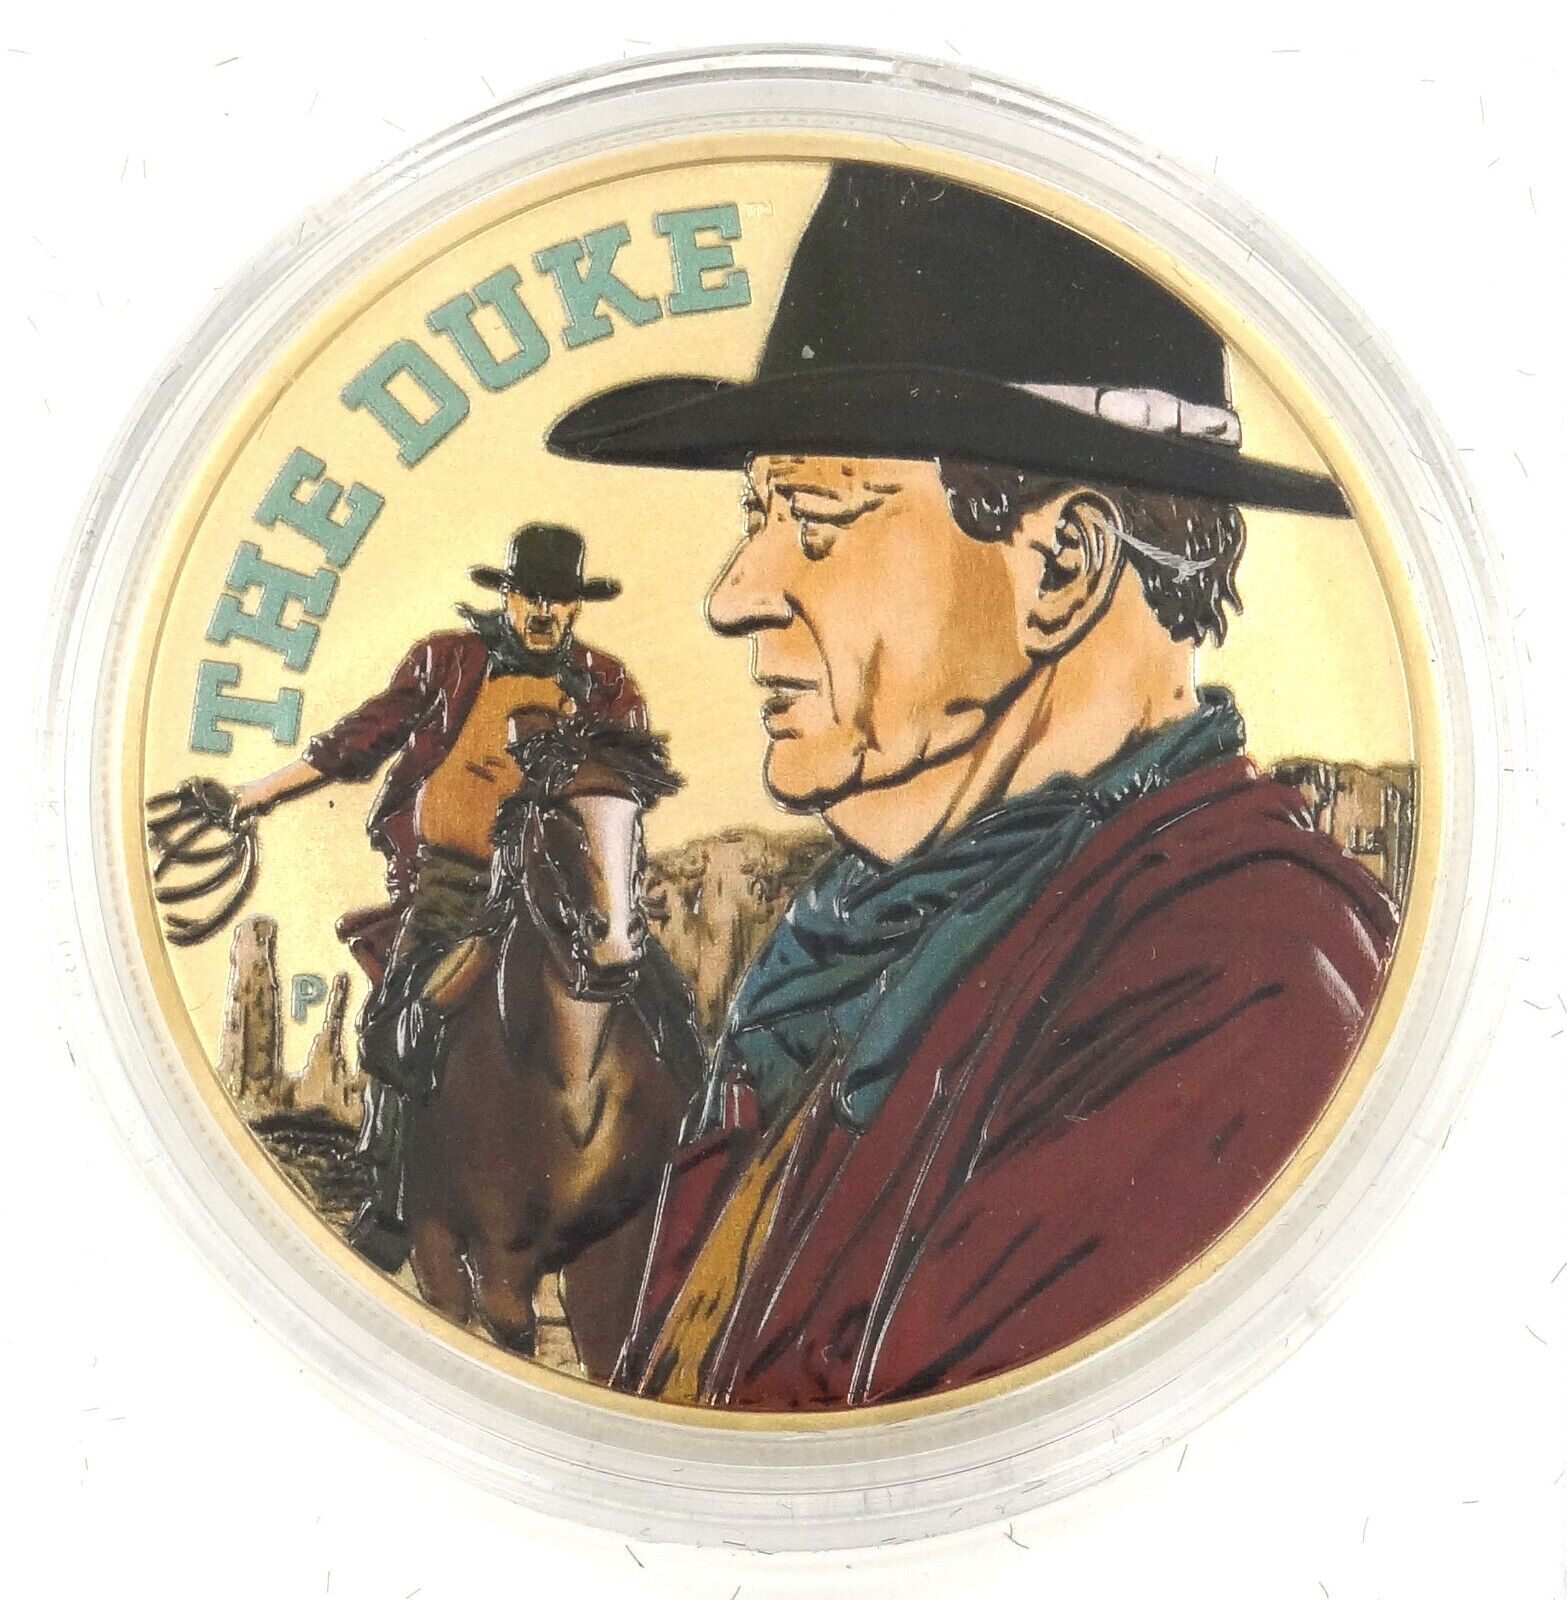 1 Oz Silver Coin 2020 Tuvalu $1 The Duke John Wayne Colorized Coin Red